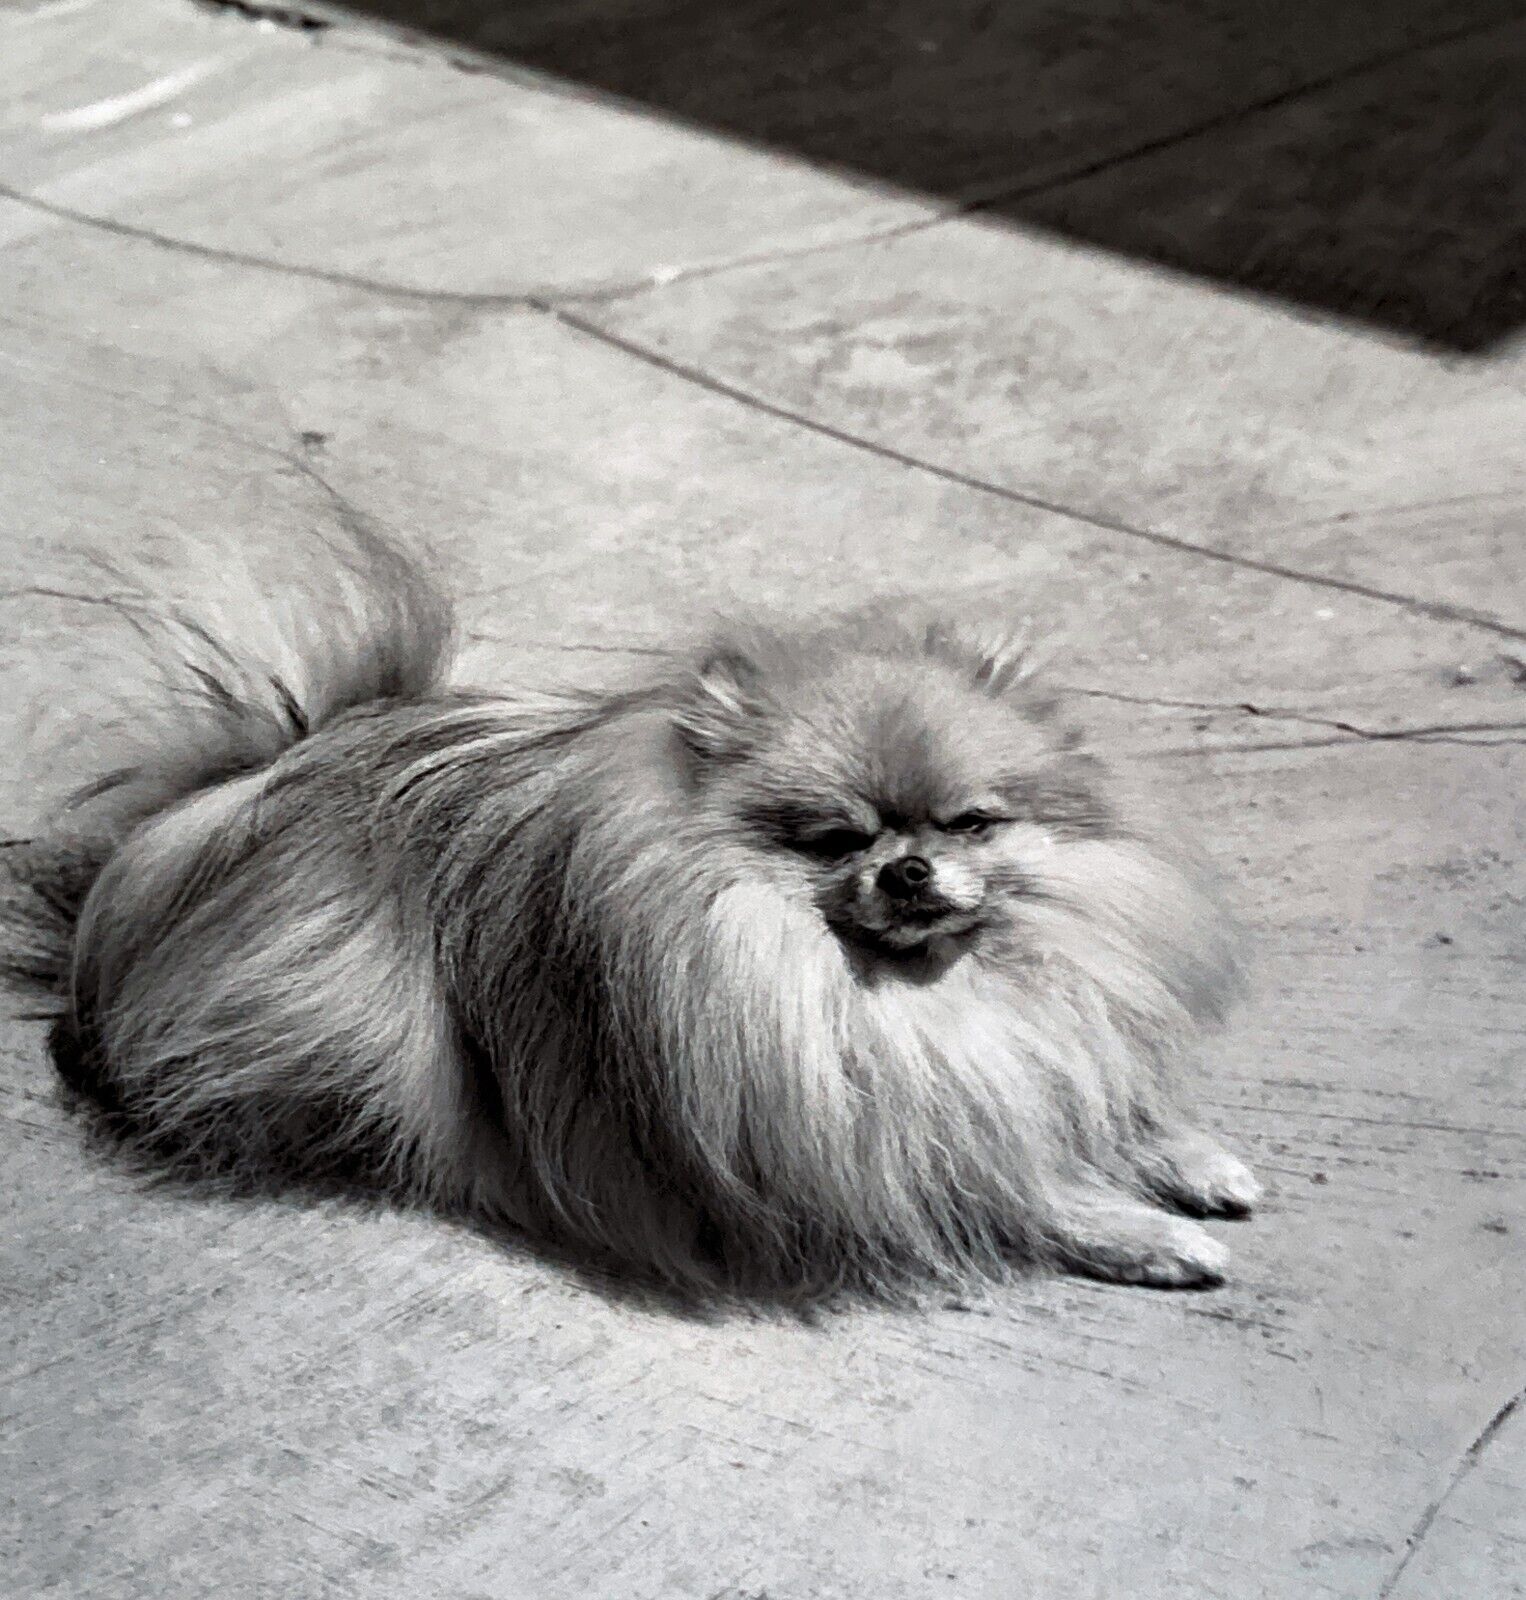 Lot of 4 Vintage Negatives Adorable Pomeranian Dog Sunning on Windy Patio